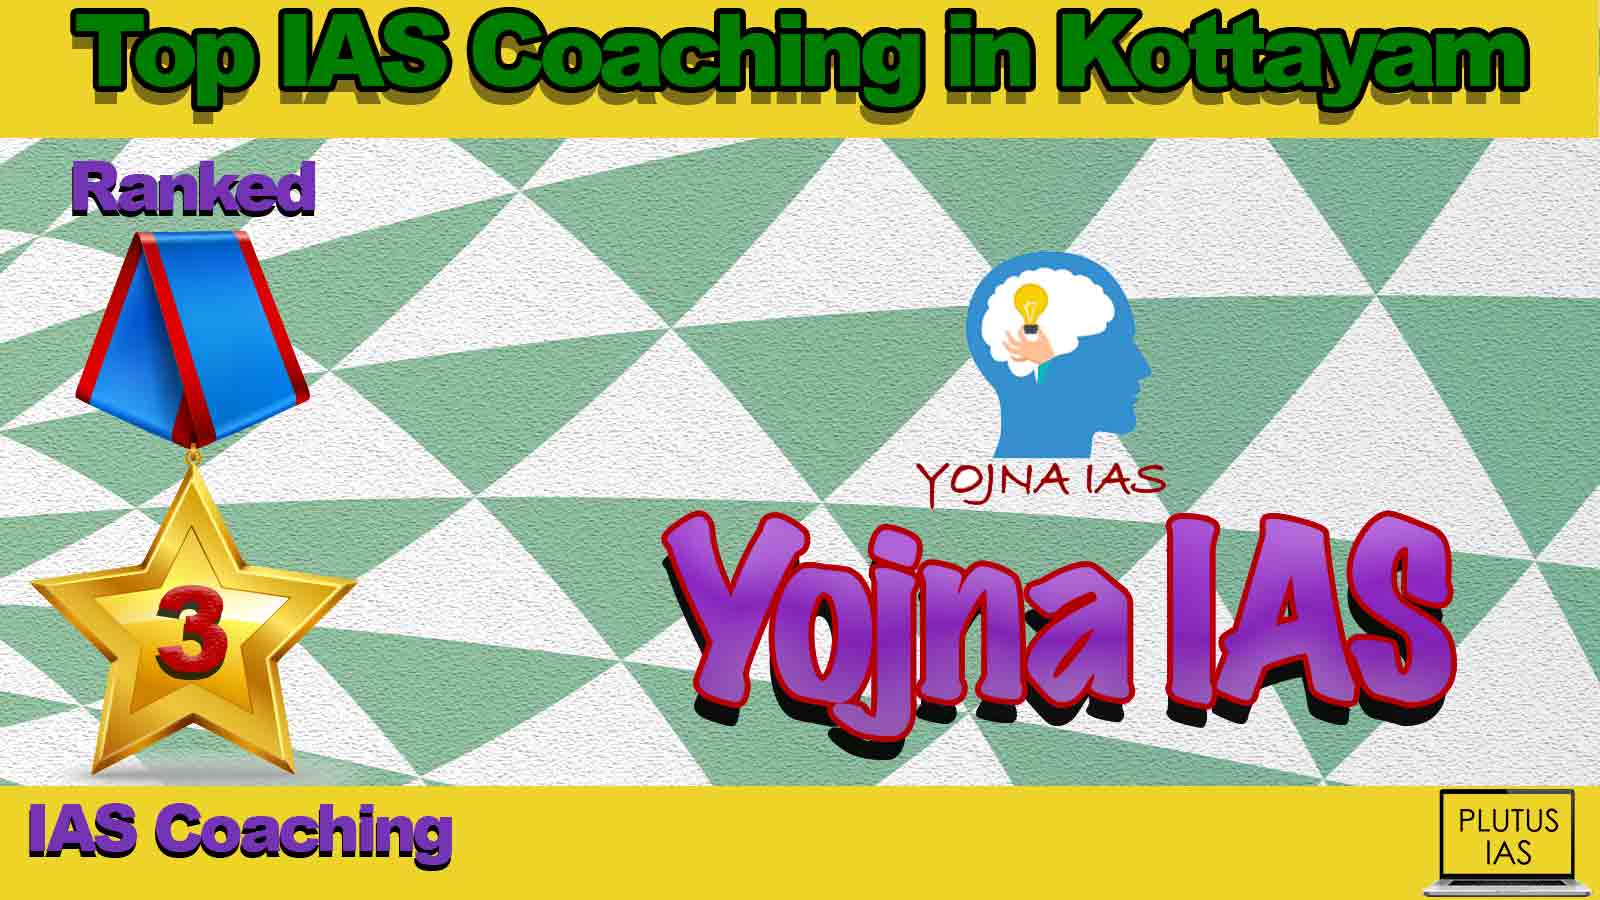 Best IAS Coaching in Kottayam